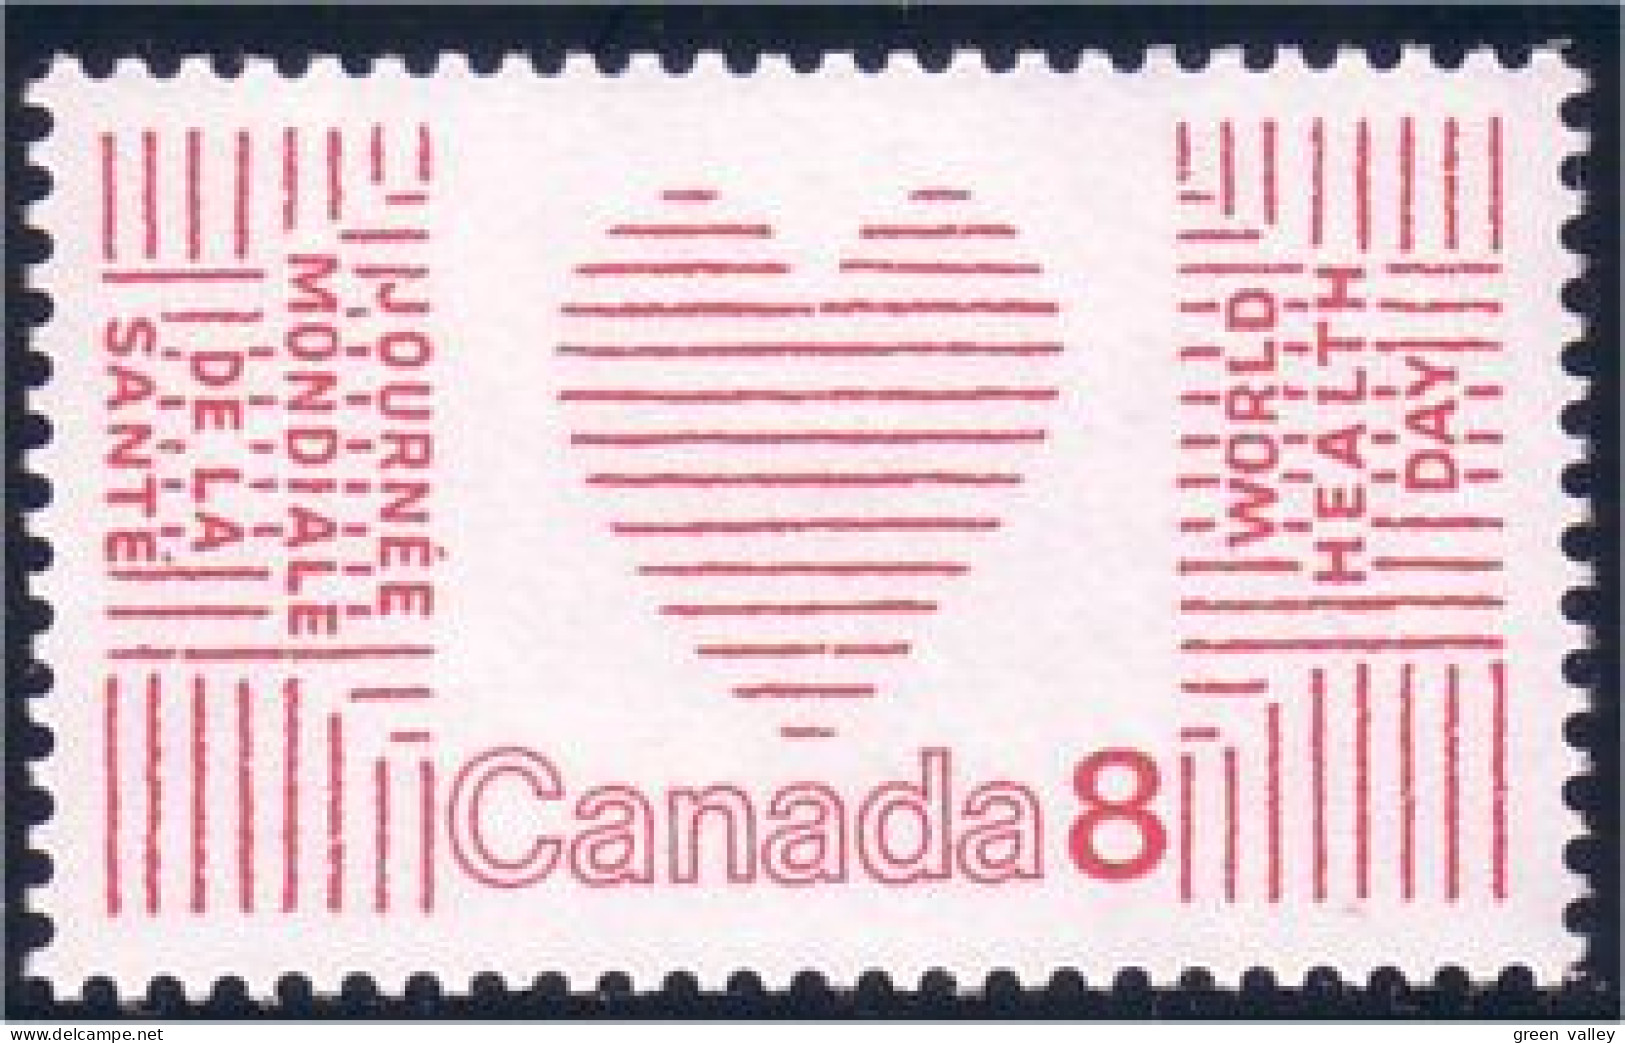 Canada Coeur Heart MNH ** Neuf SC (C05-60ia) - Ungebraucht